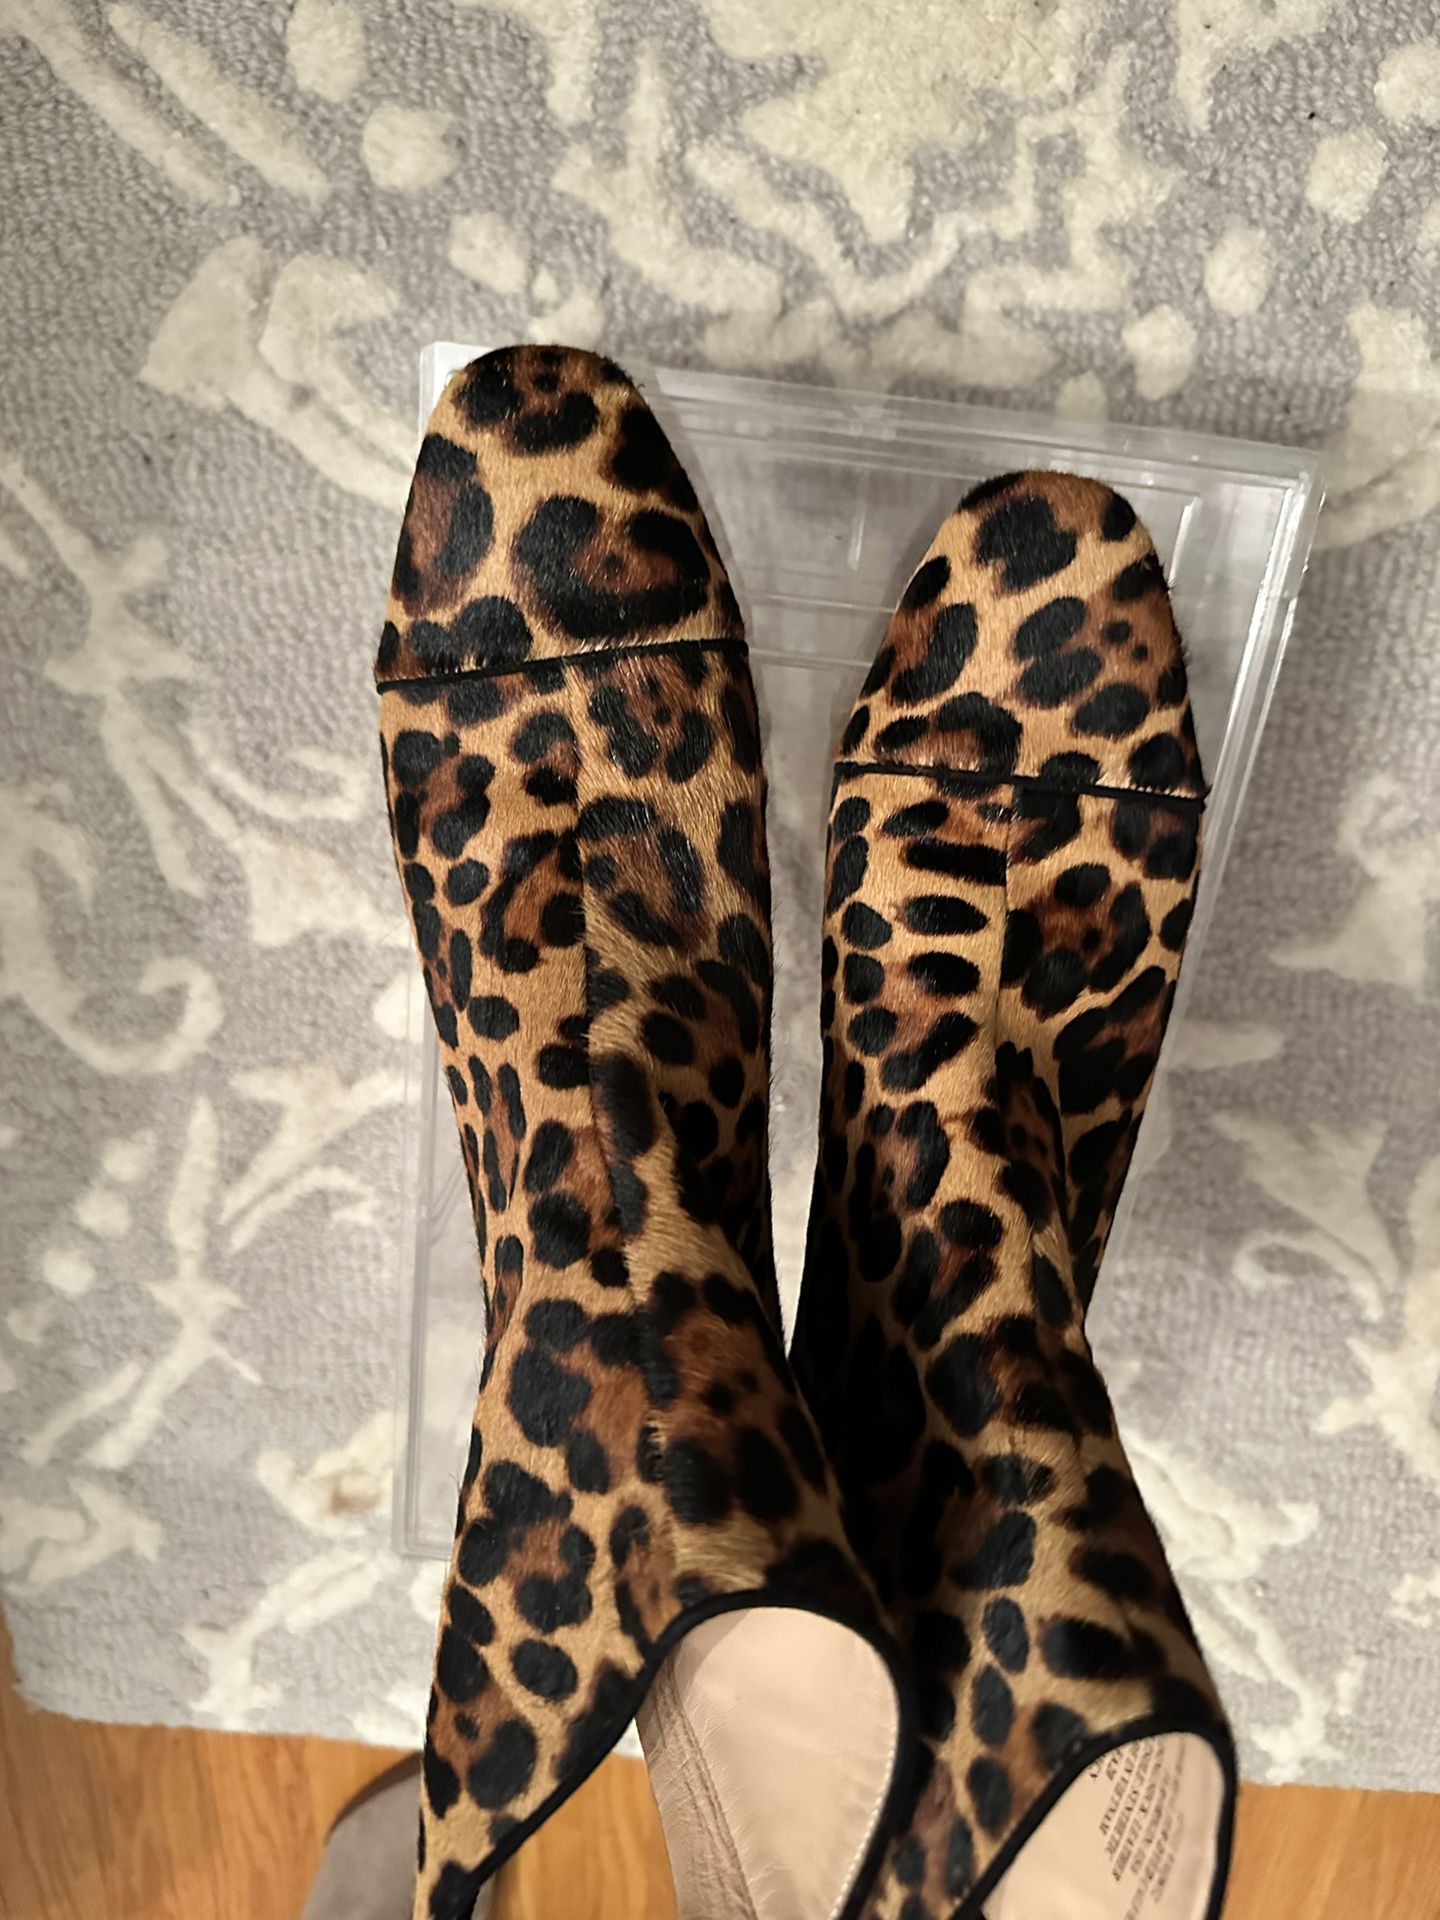 Jcrew Leopard Ankle Boots $65.00